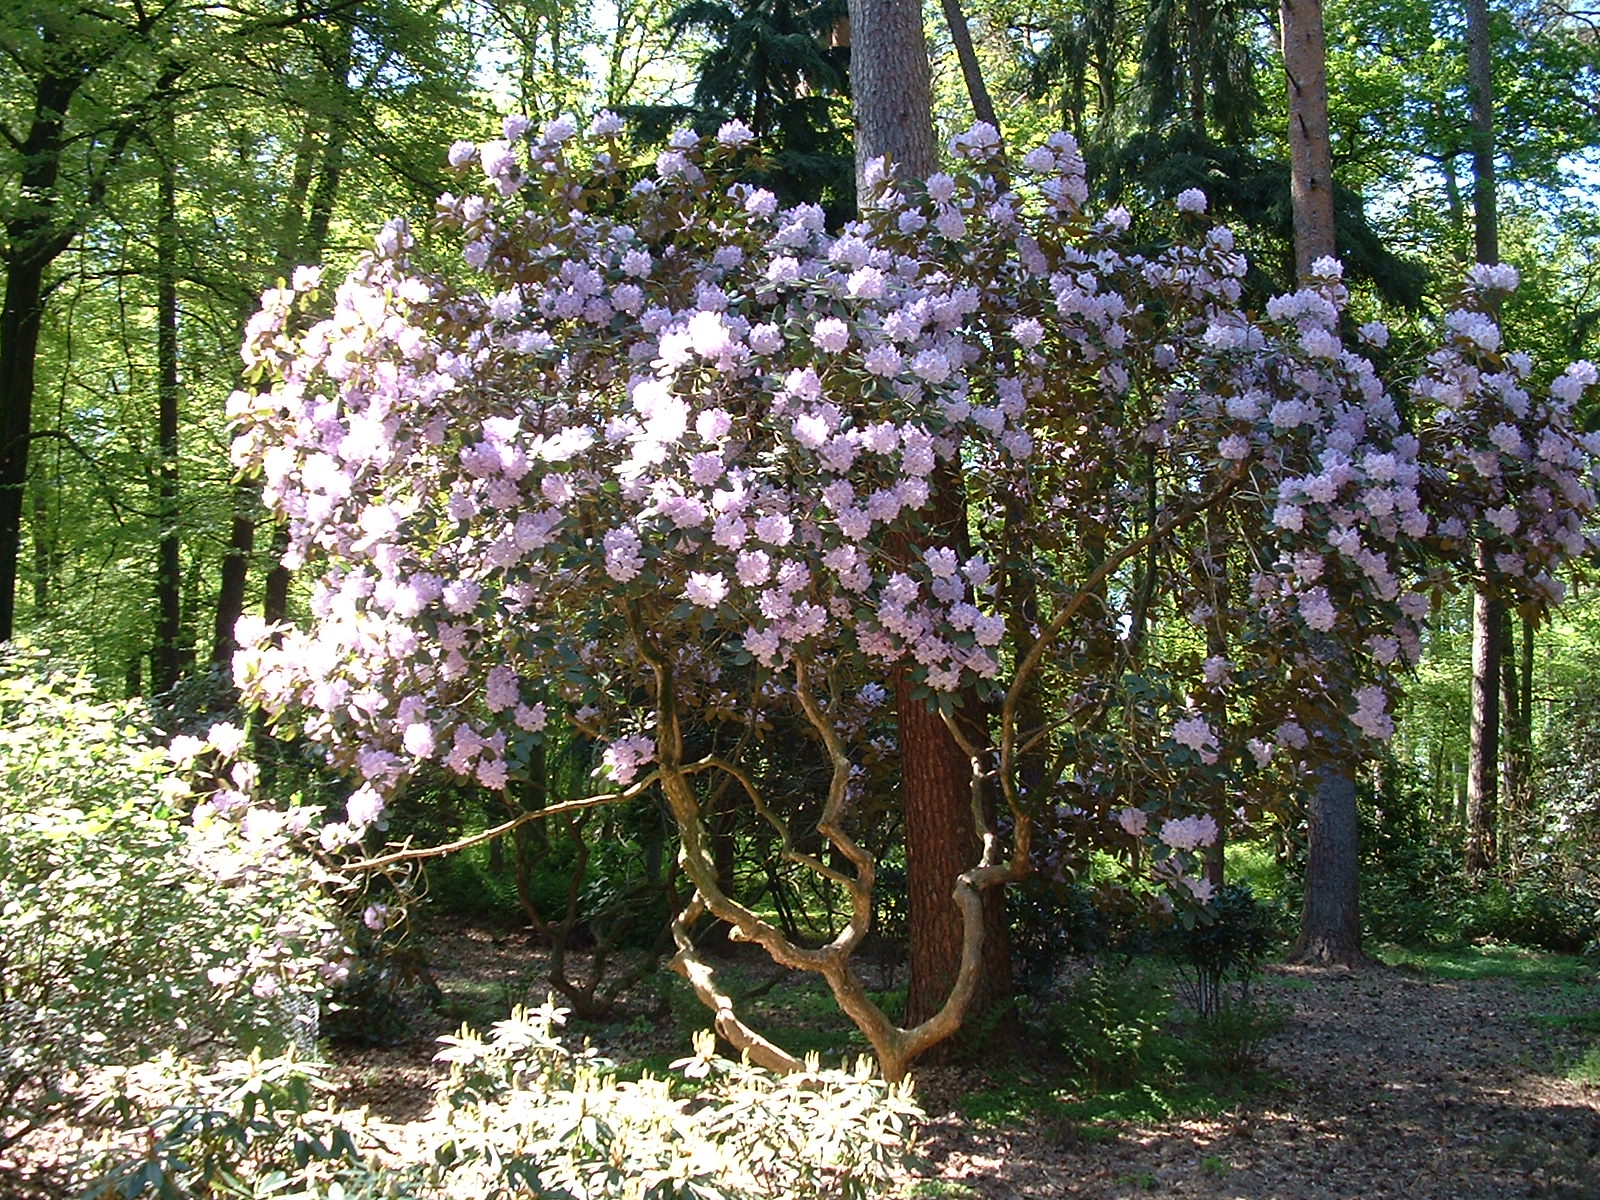 BRUNS Rhododendron-Park in Gristede